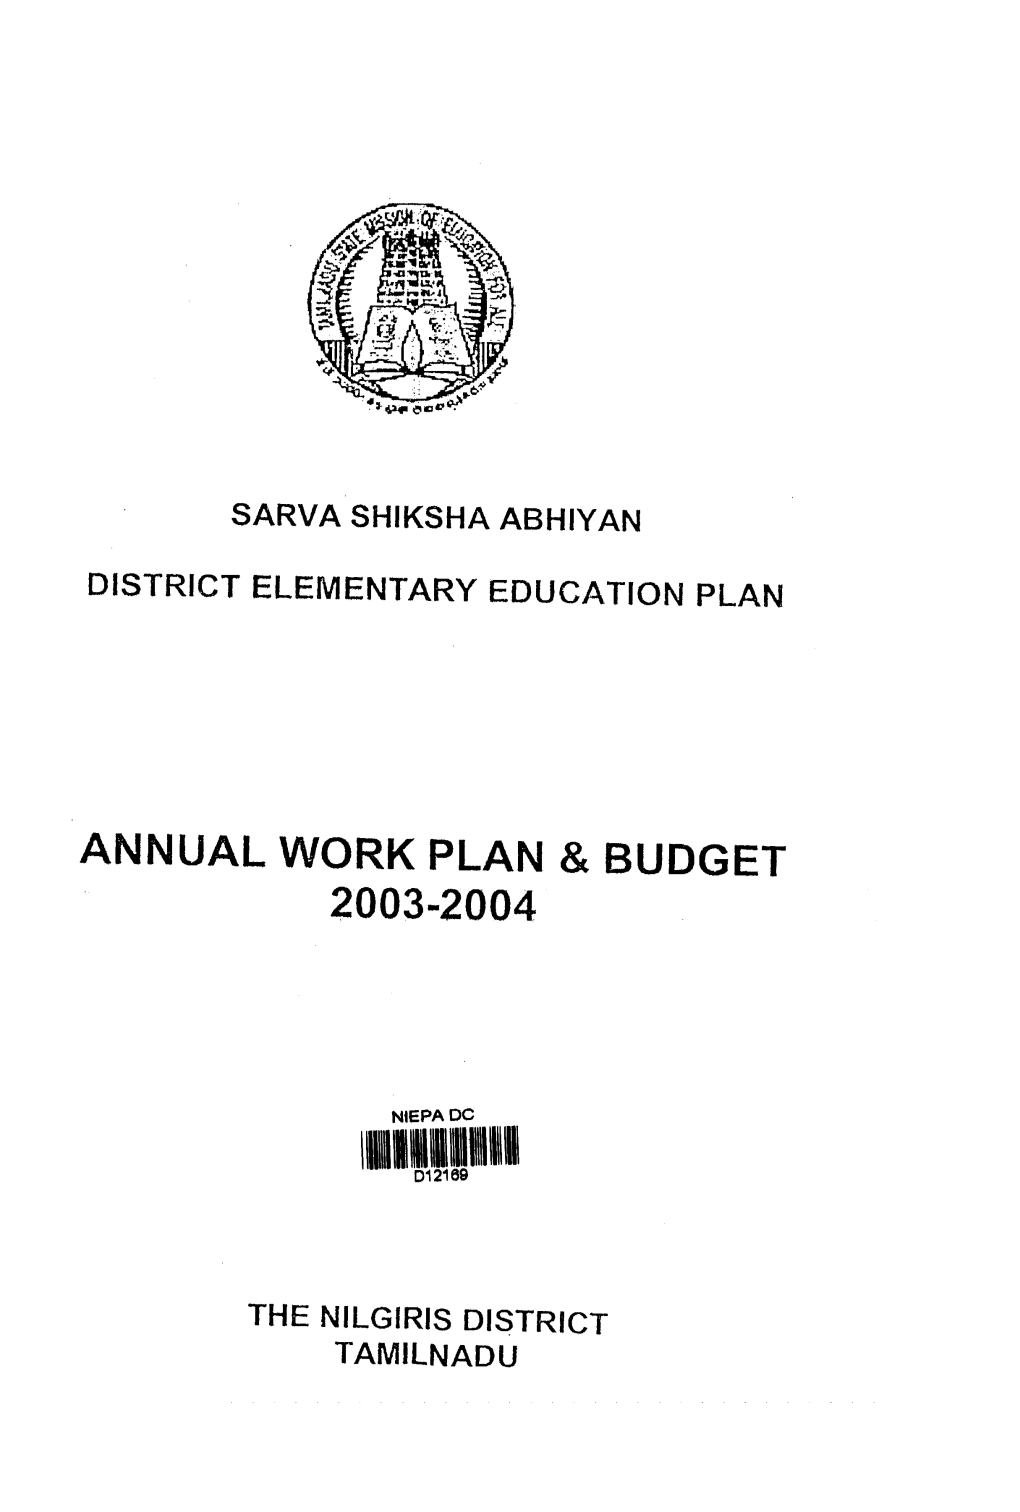 Annual Work Plan & Budget